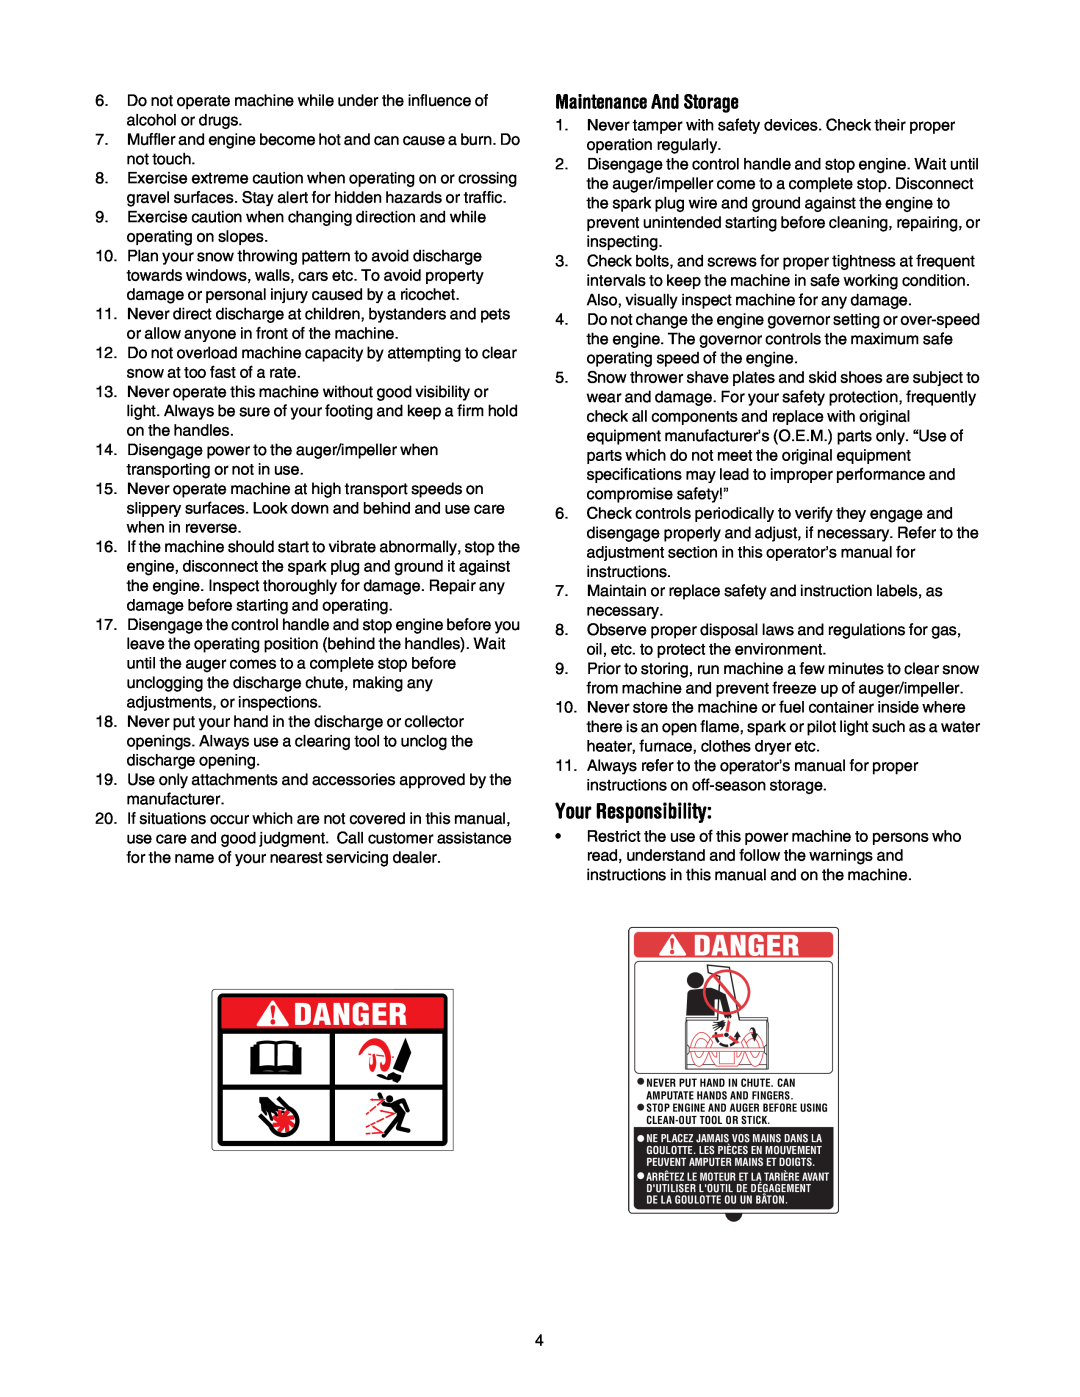 MTD OGST-3106 manual Danger, Your Responsibility 